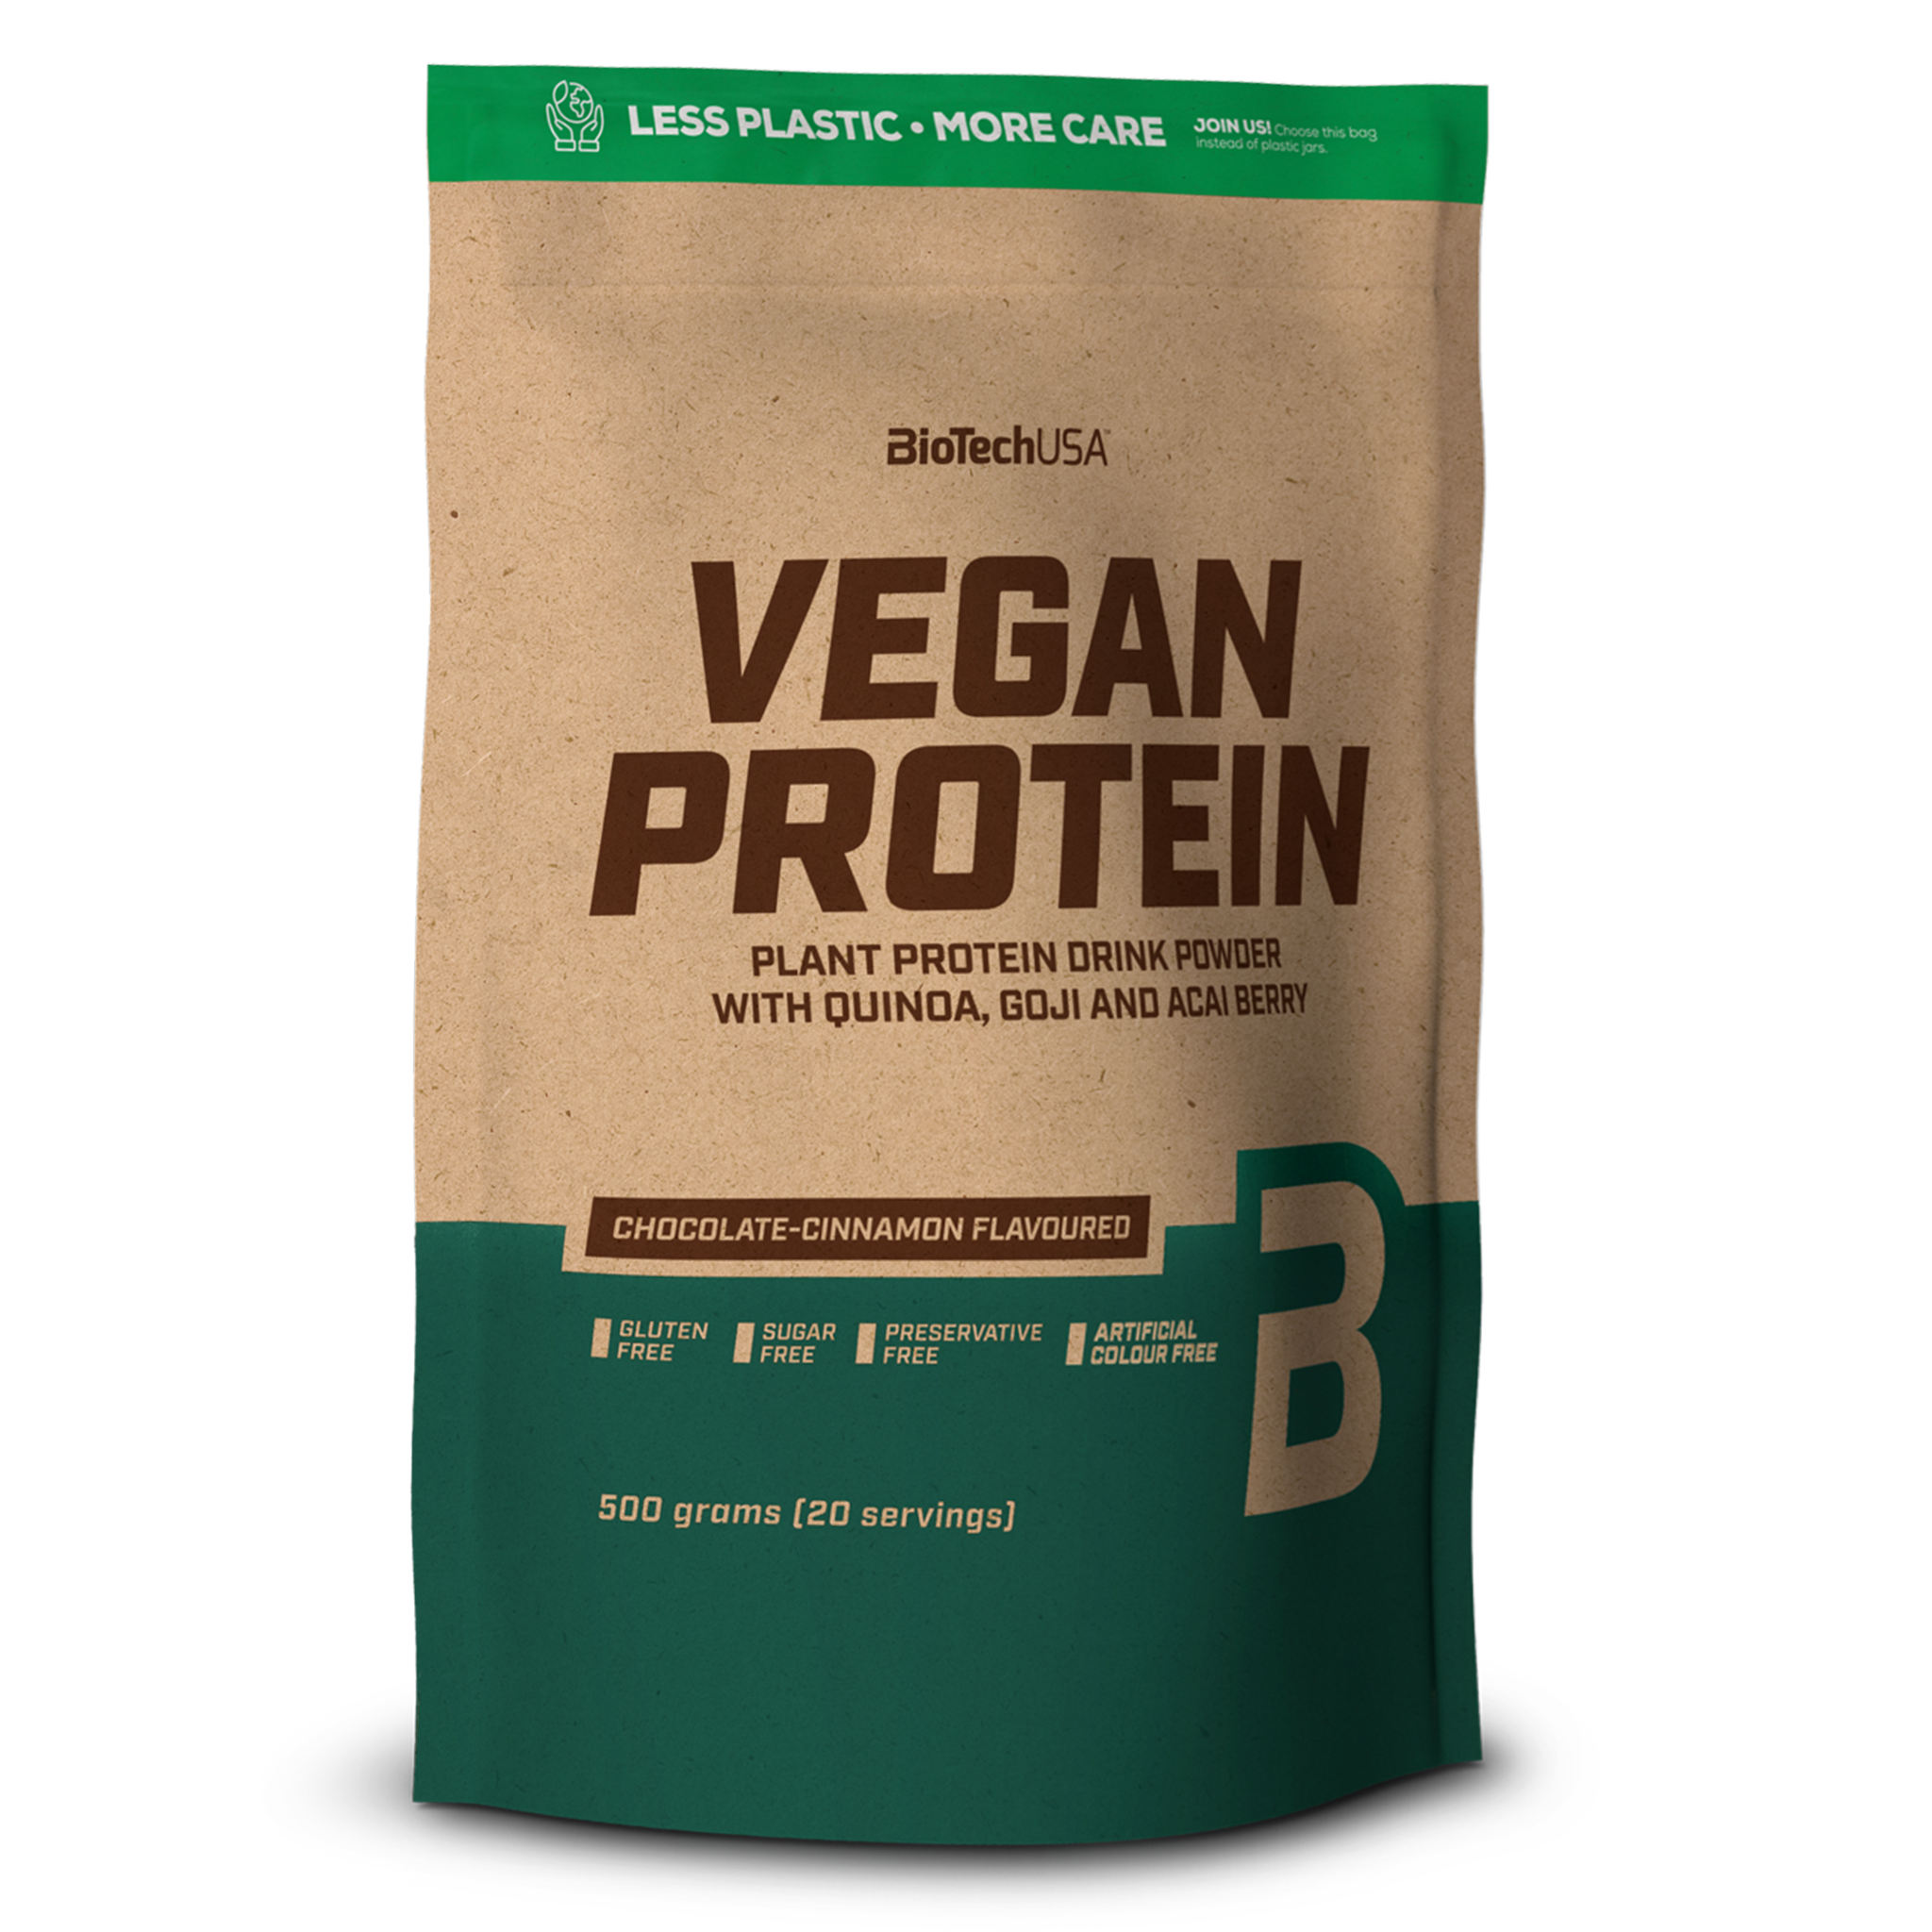 Vegan Protein Chocolate Cinnamon - 1 x 500g